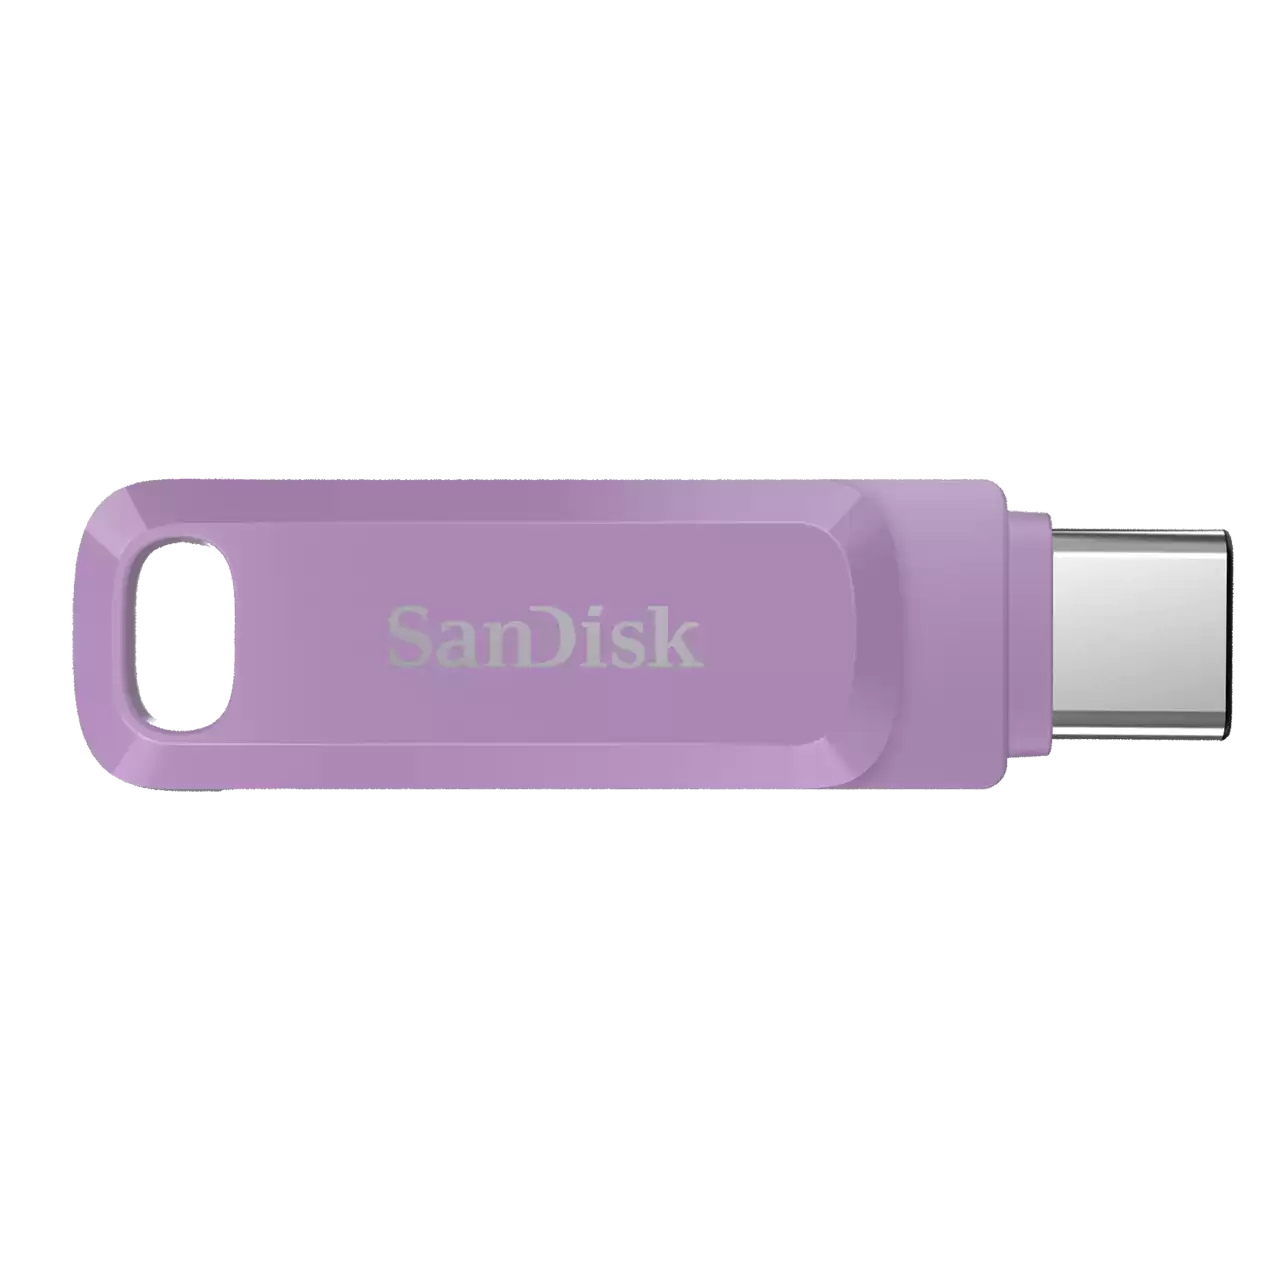 SanDisk 256GB Ultra Dual Drive Go USB Type-C Flash Drive, Lavender